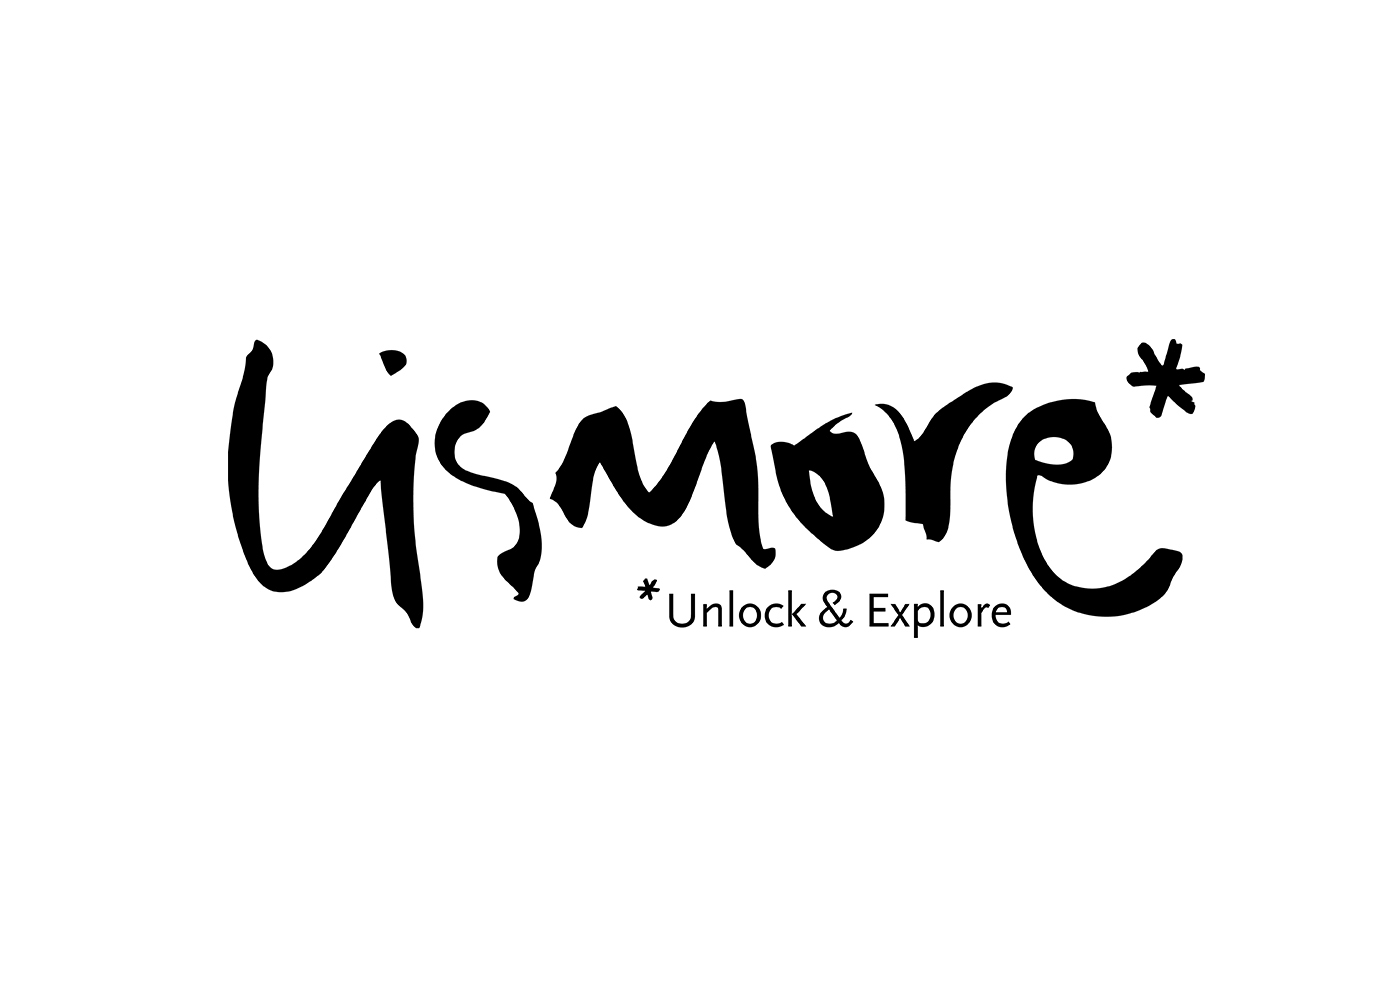 lismore tourism logo handdrawn heritage app wayfinding augmented reality